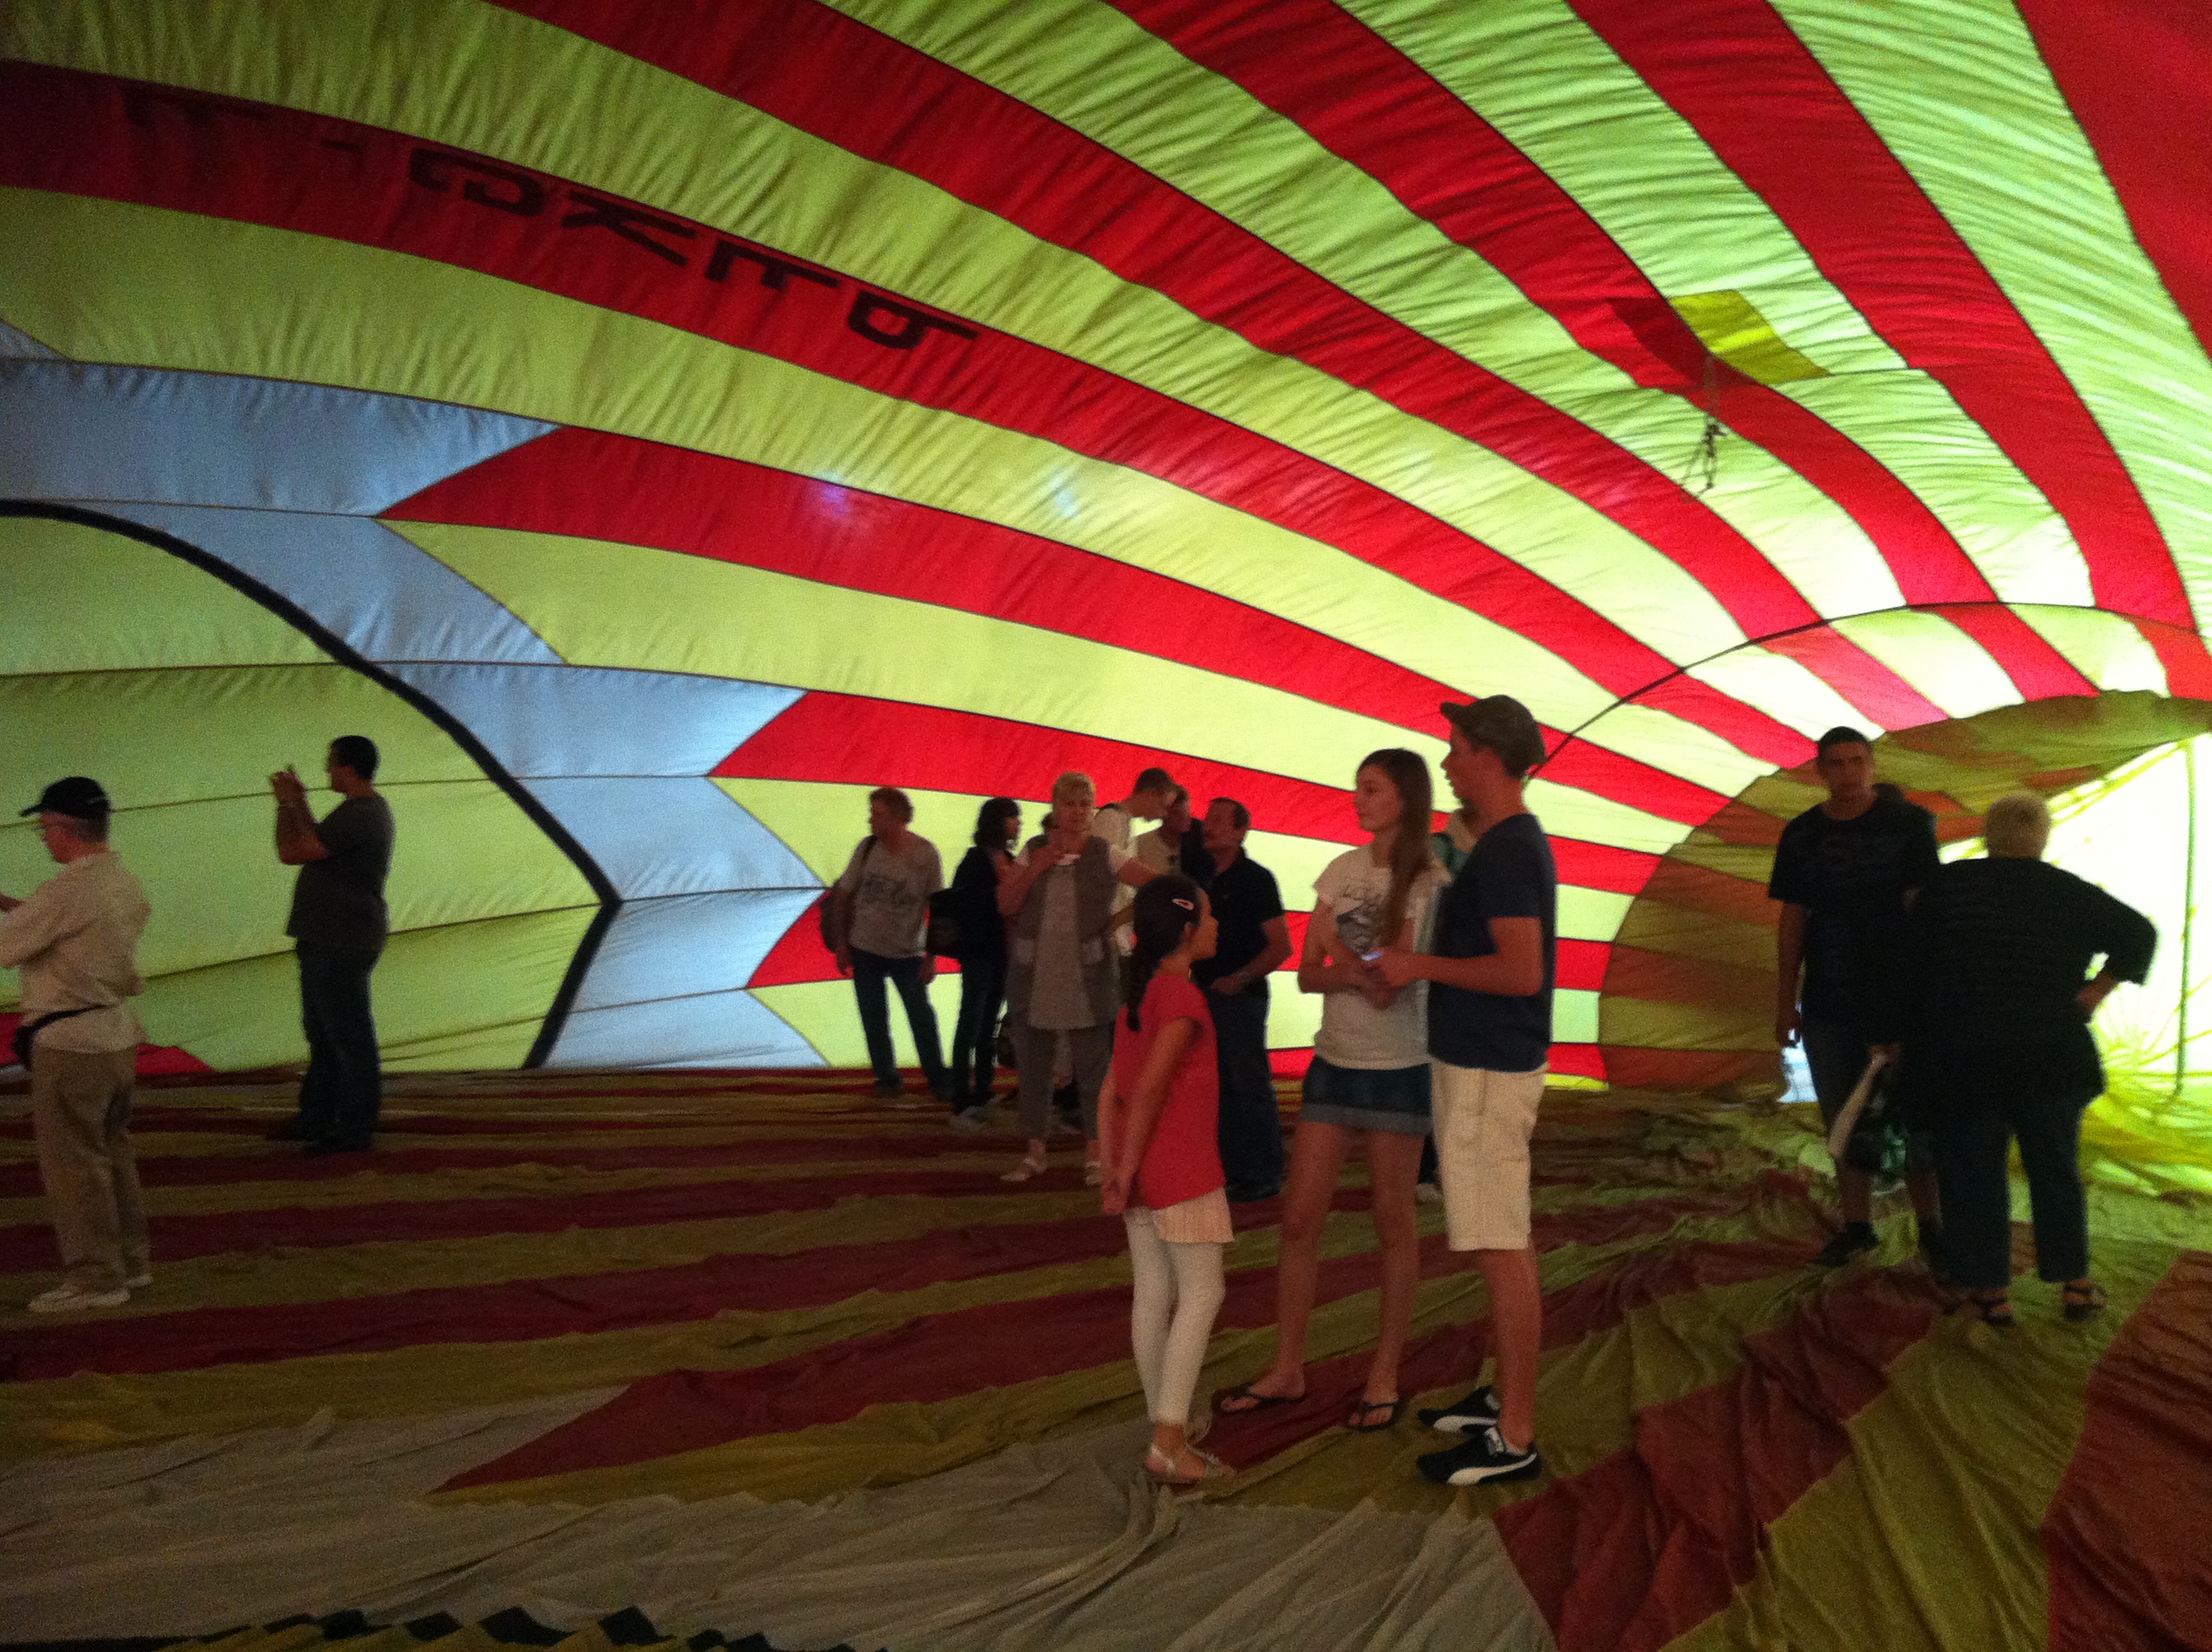 Intrieur d'un ballon au Mondial Air Ballon Chambley 2013